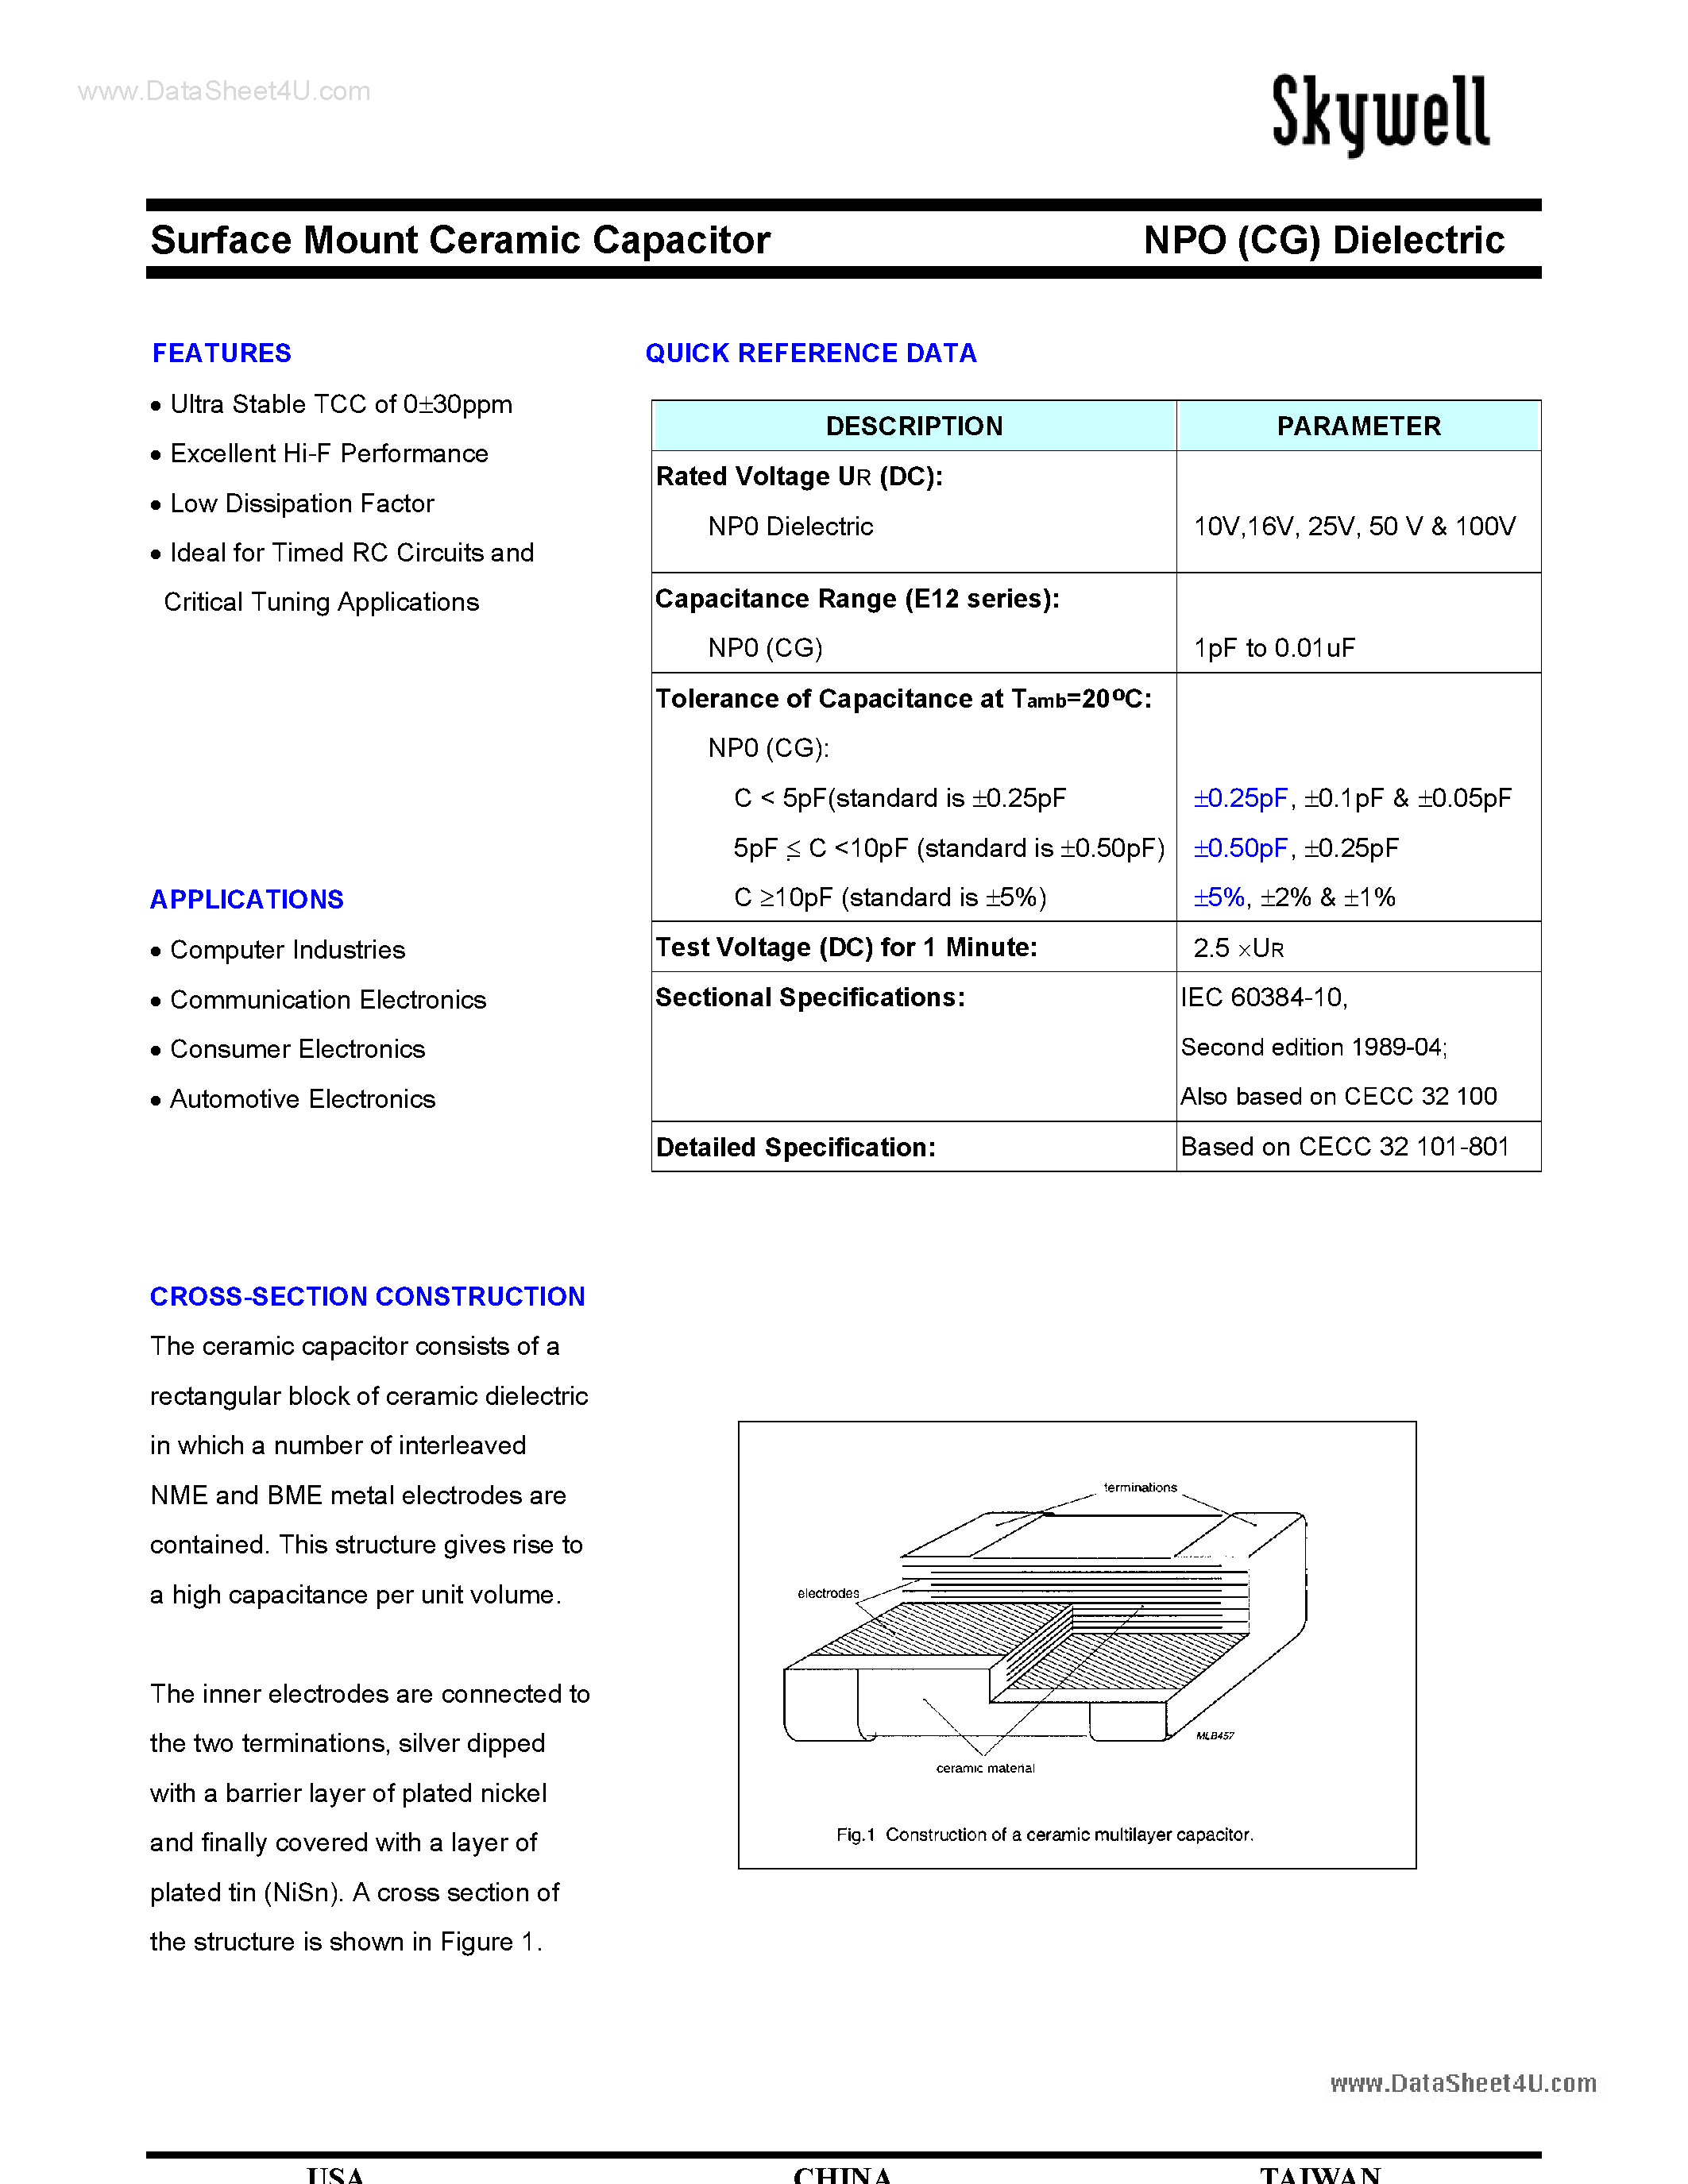 Даташит 06032Exxxx - SUrface Mount Ceramic Capacitor страница 1